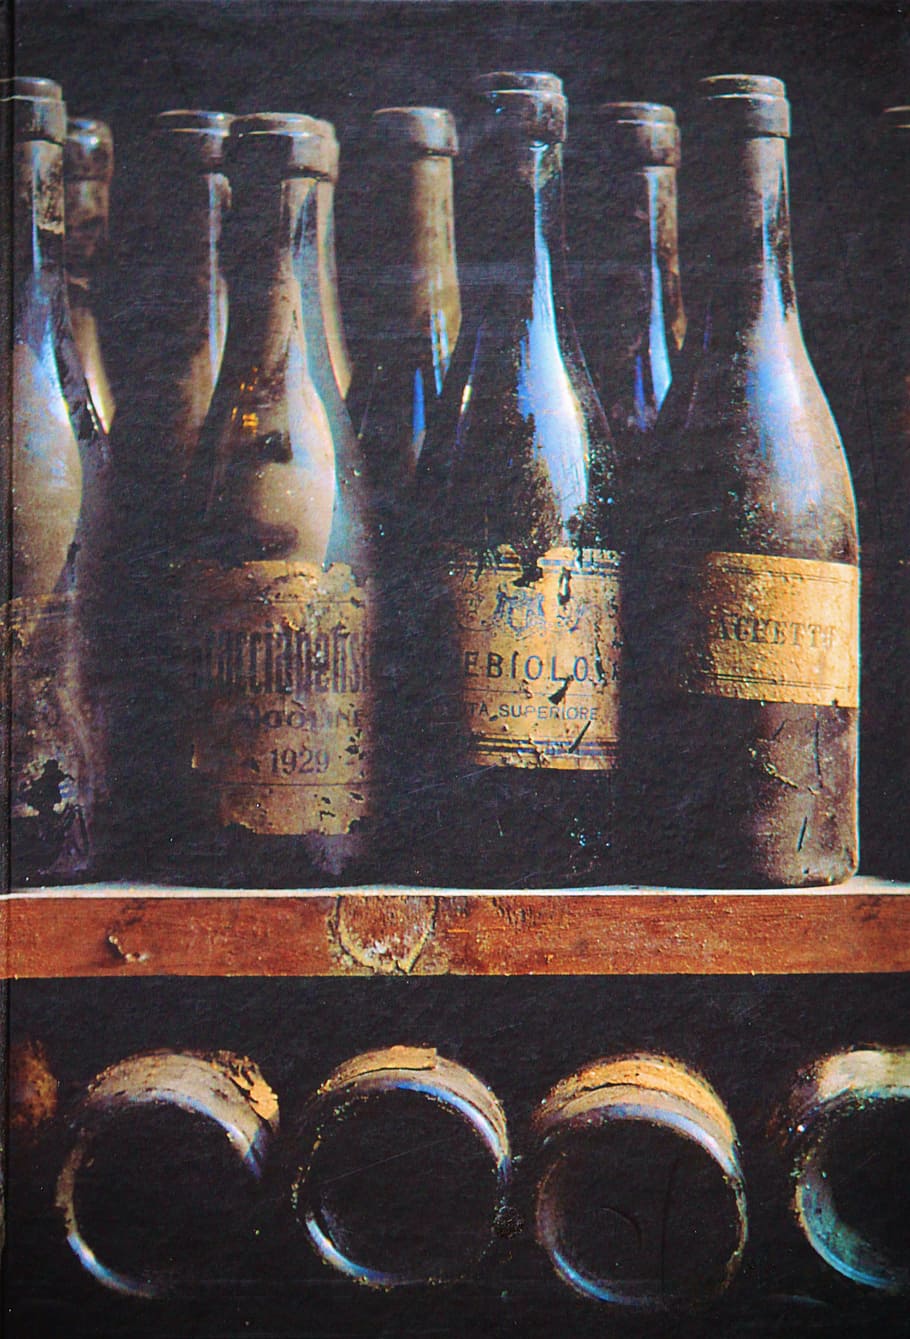 black, glass wine bottles, brown, wooden, wine shelf, wine bottles, wine bottle range, bottles, shelf, wine rack